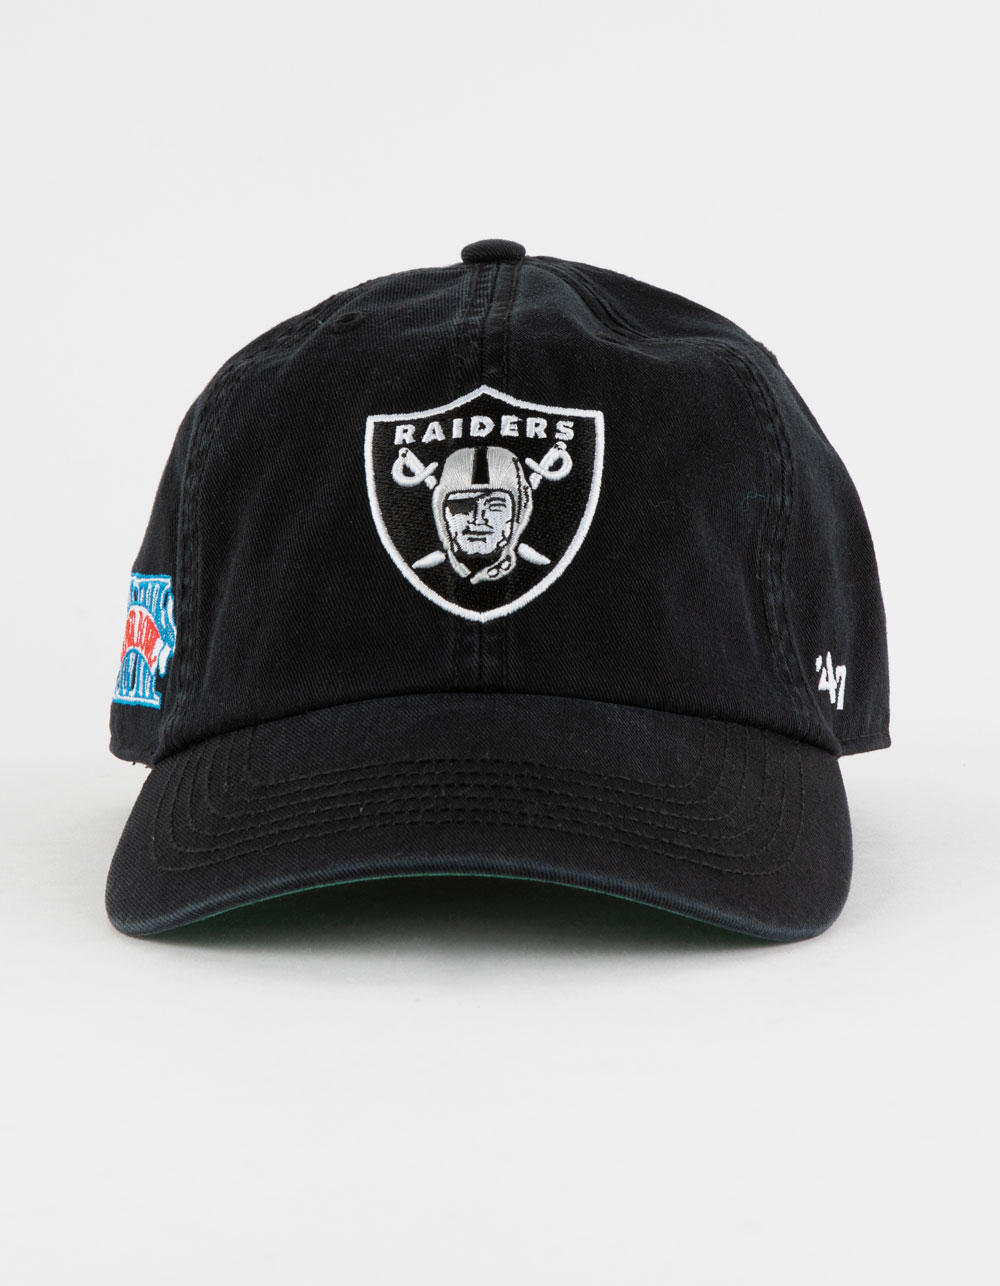 47 BRAND Las Vegas Raiders Sure Shot '47 Franchise Fitted Hat